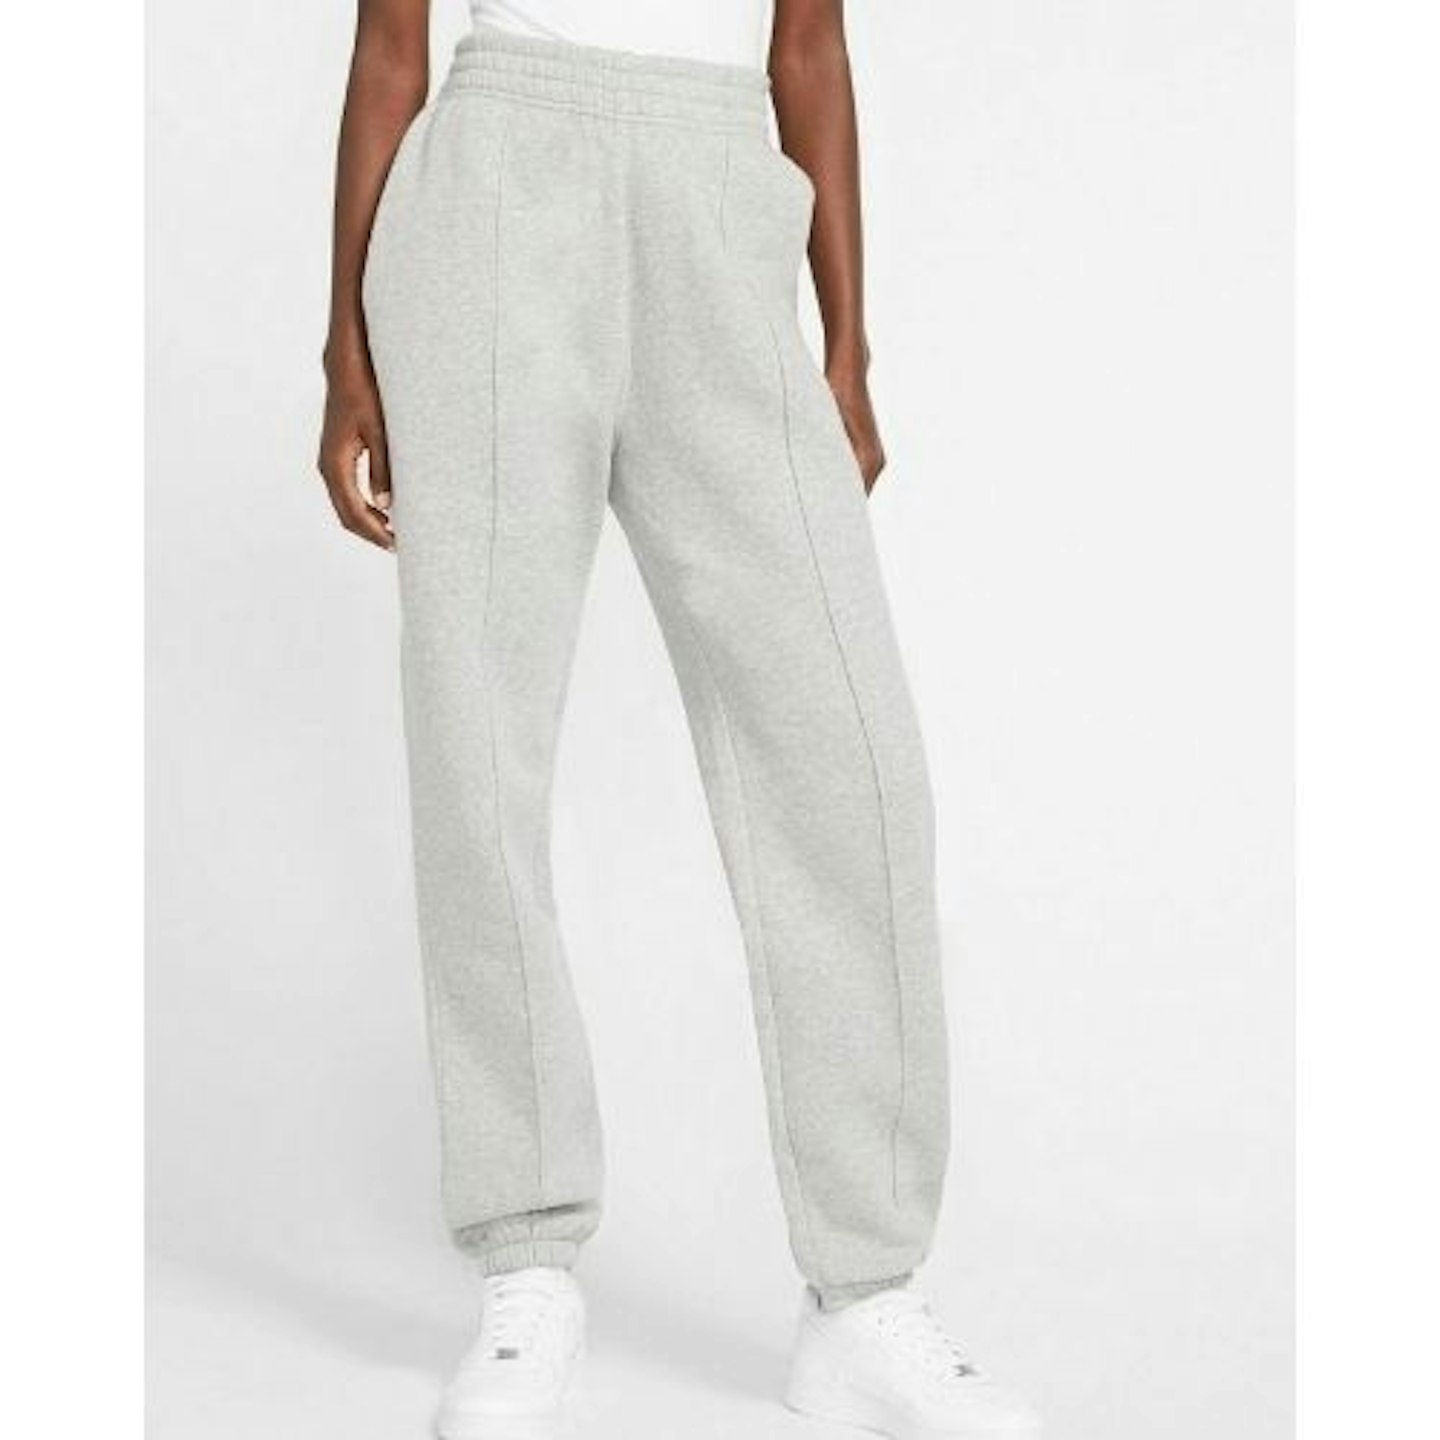 Nike NSW Trend Fleece Pants - Dark Grey Heather